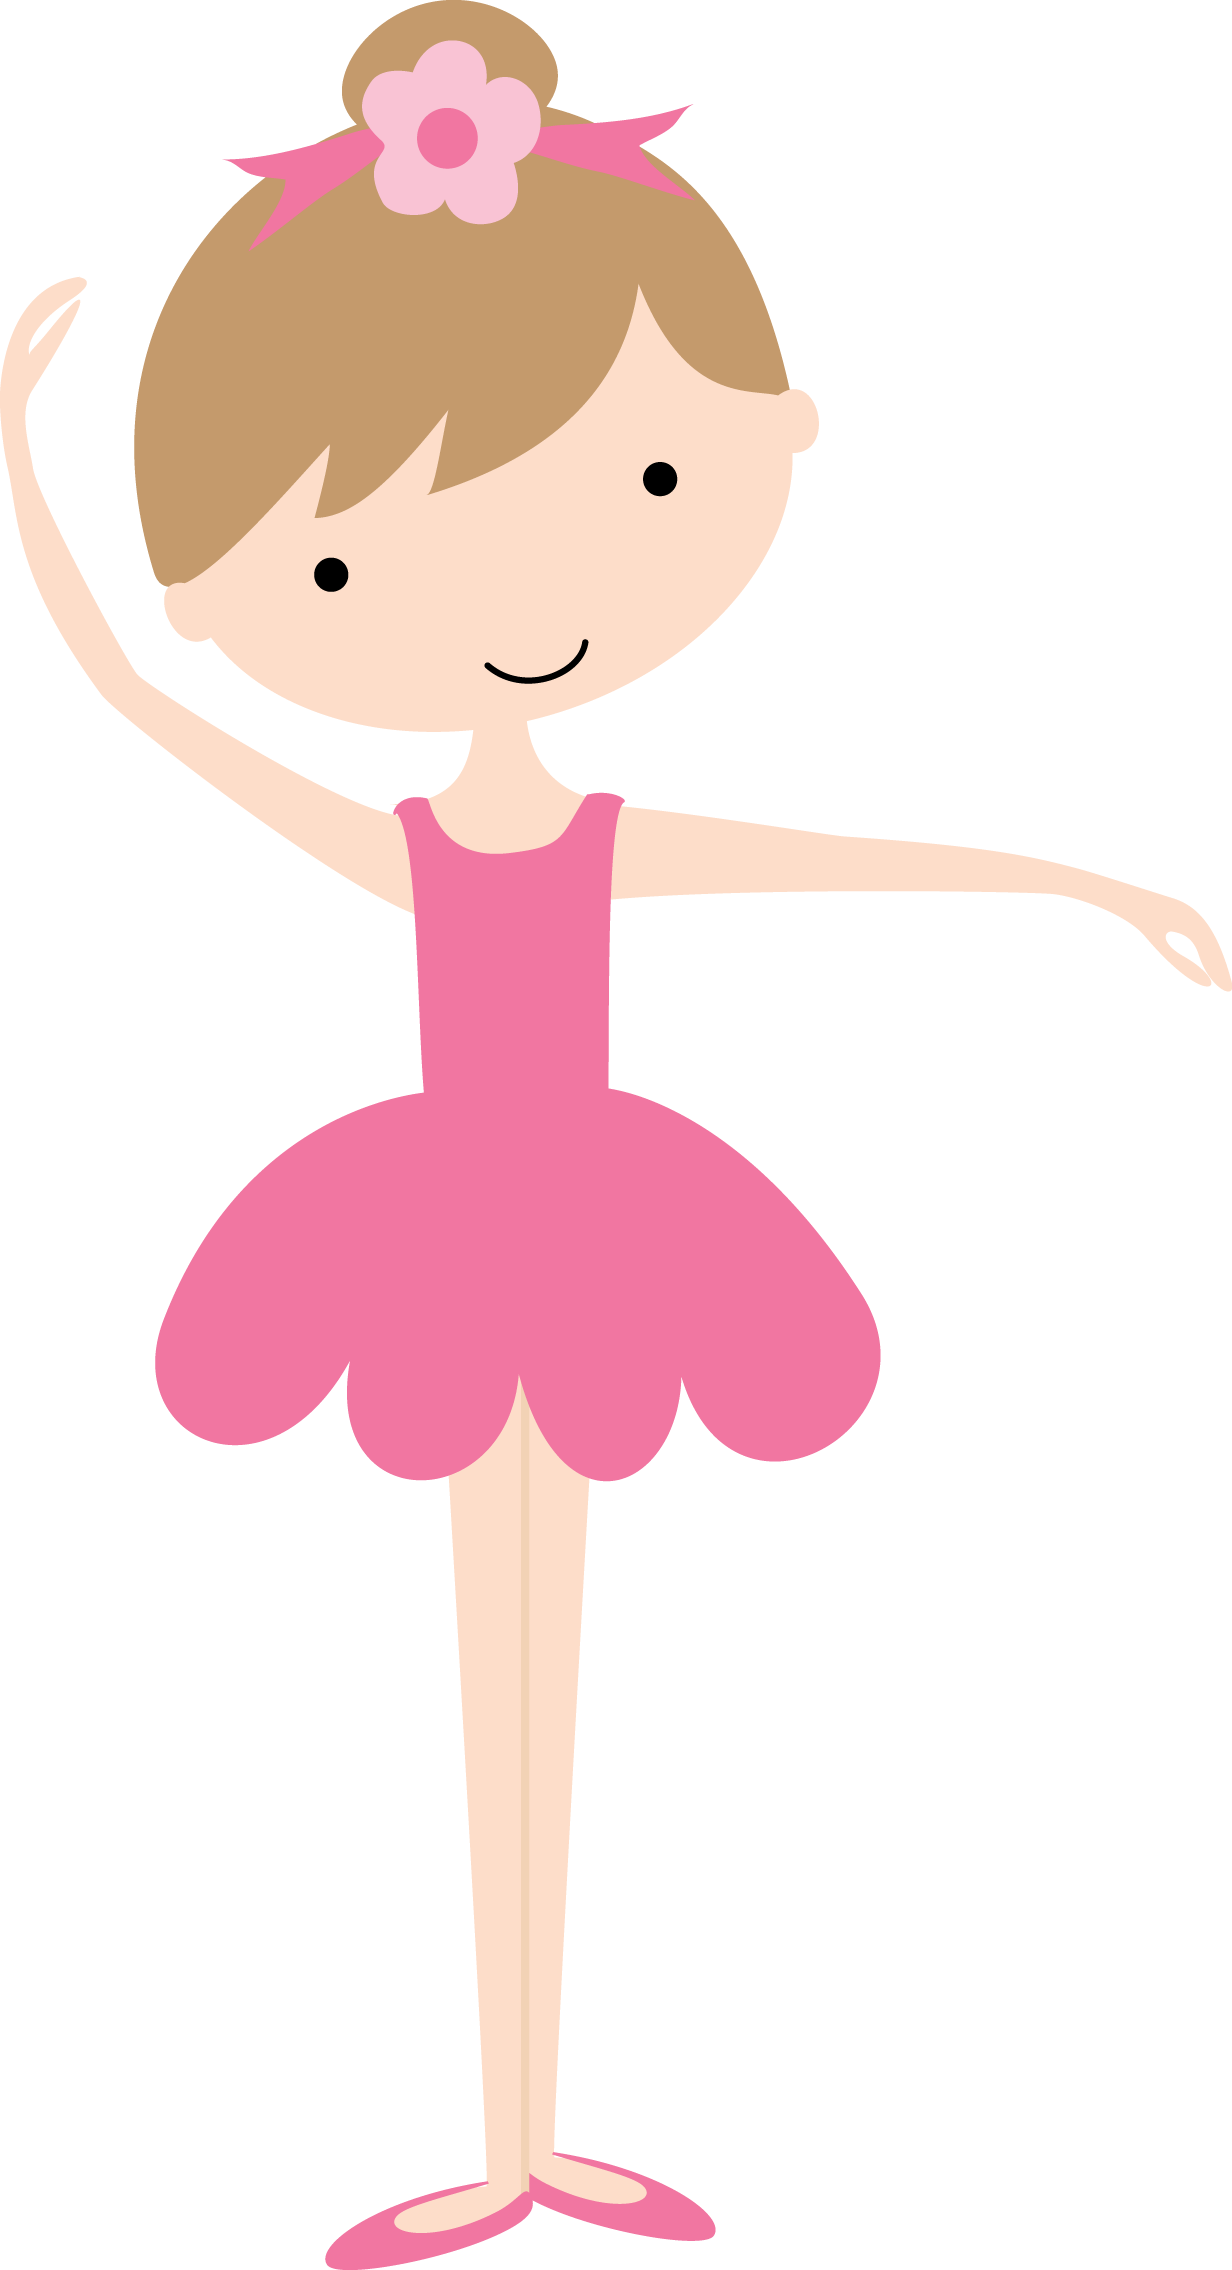 Cute ballerina cliparts free. Gymnastics clipart ballet